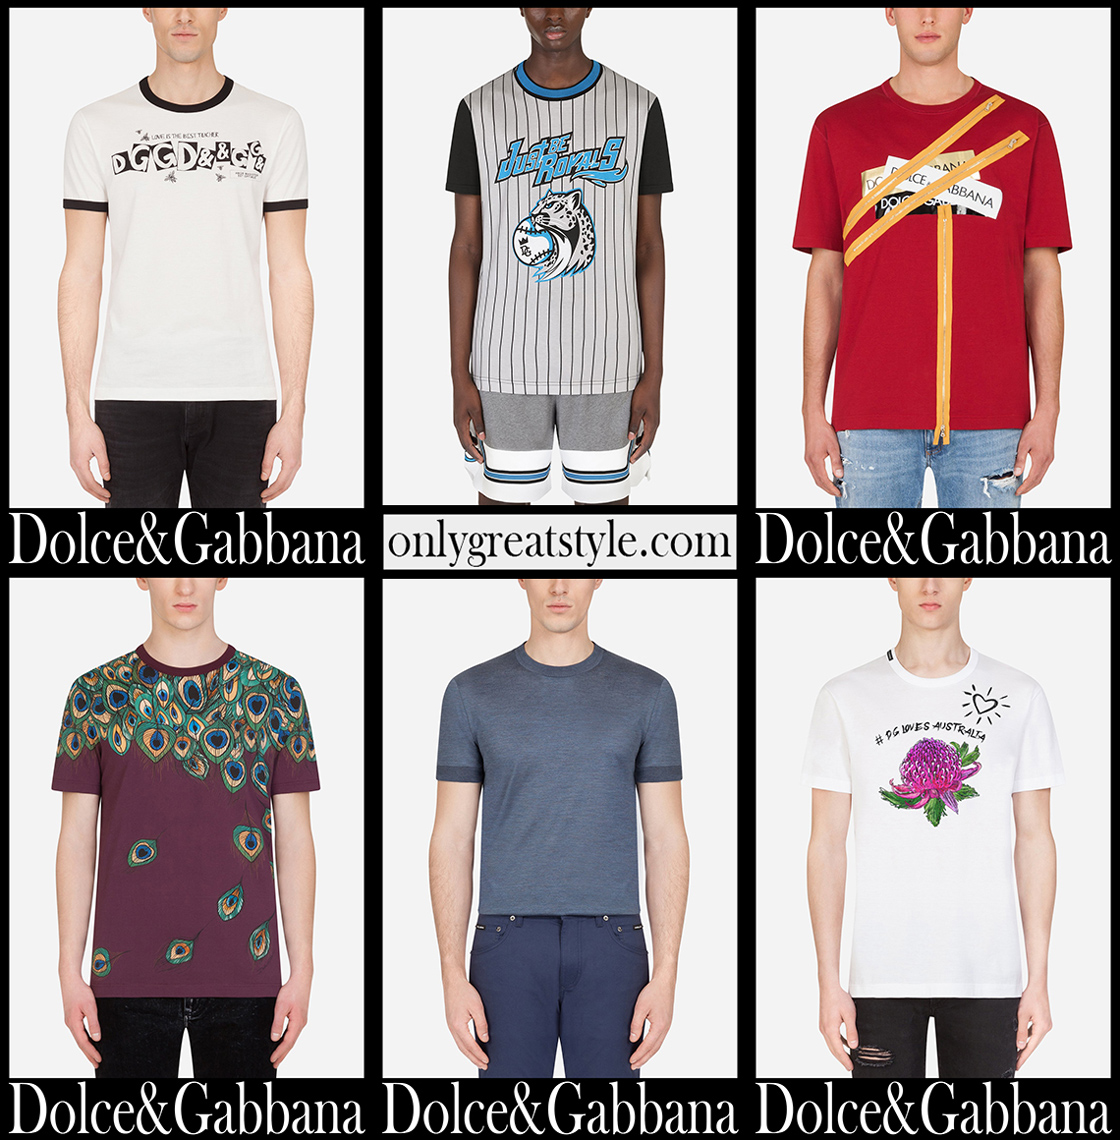 Dolce Gabbana t shirts 2021 new arrivals mens clothing